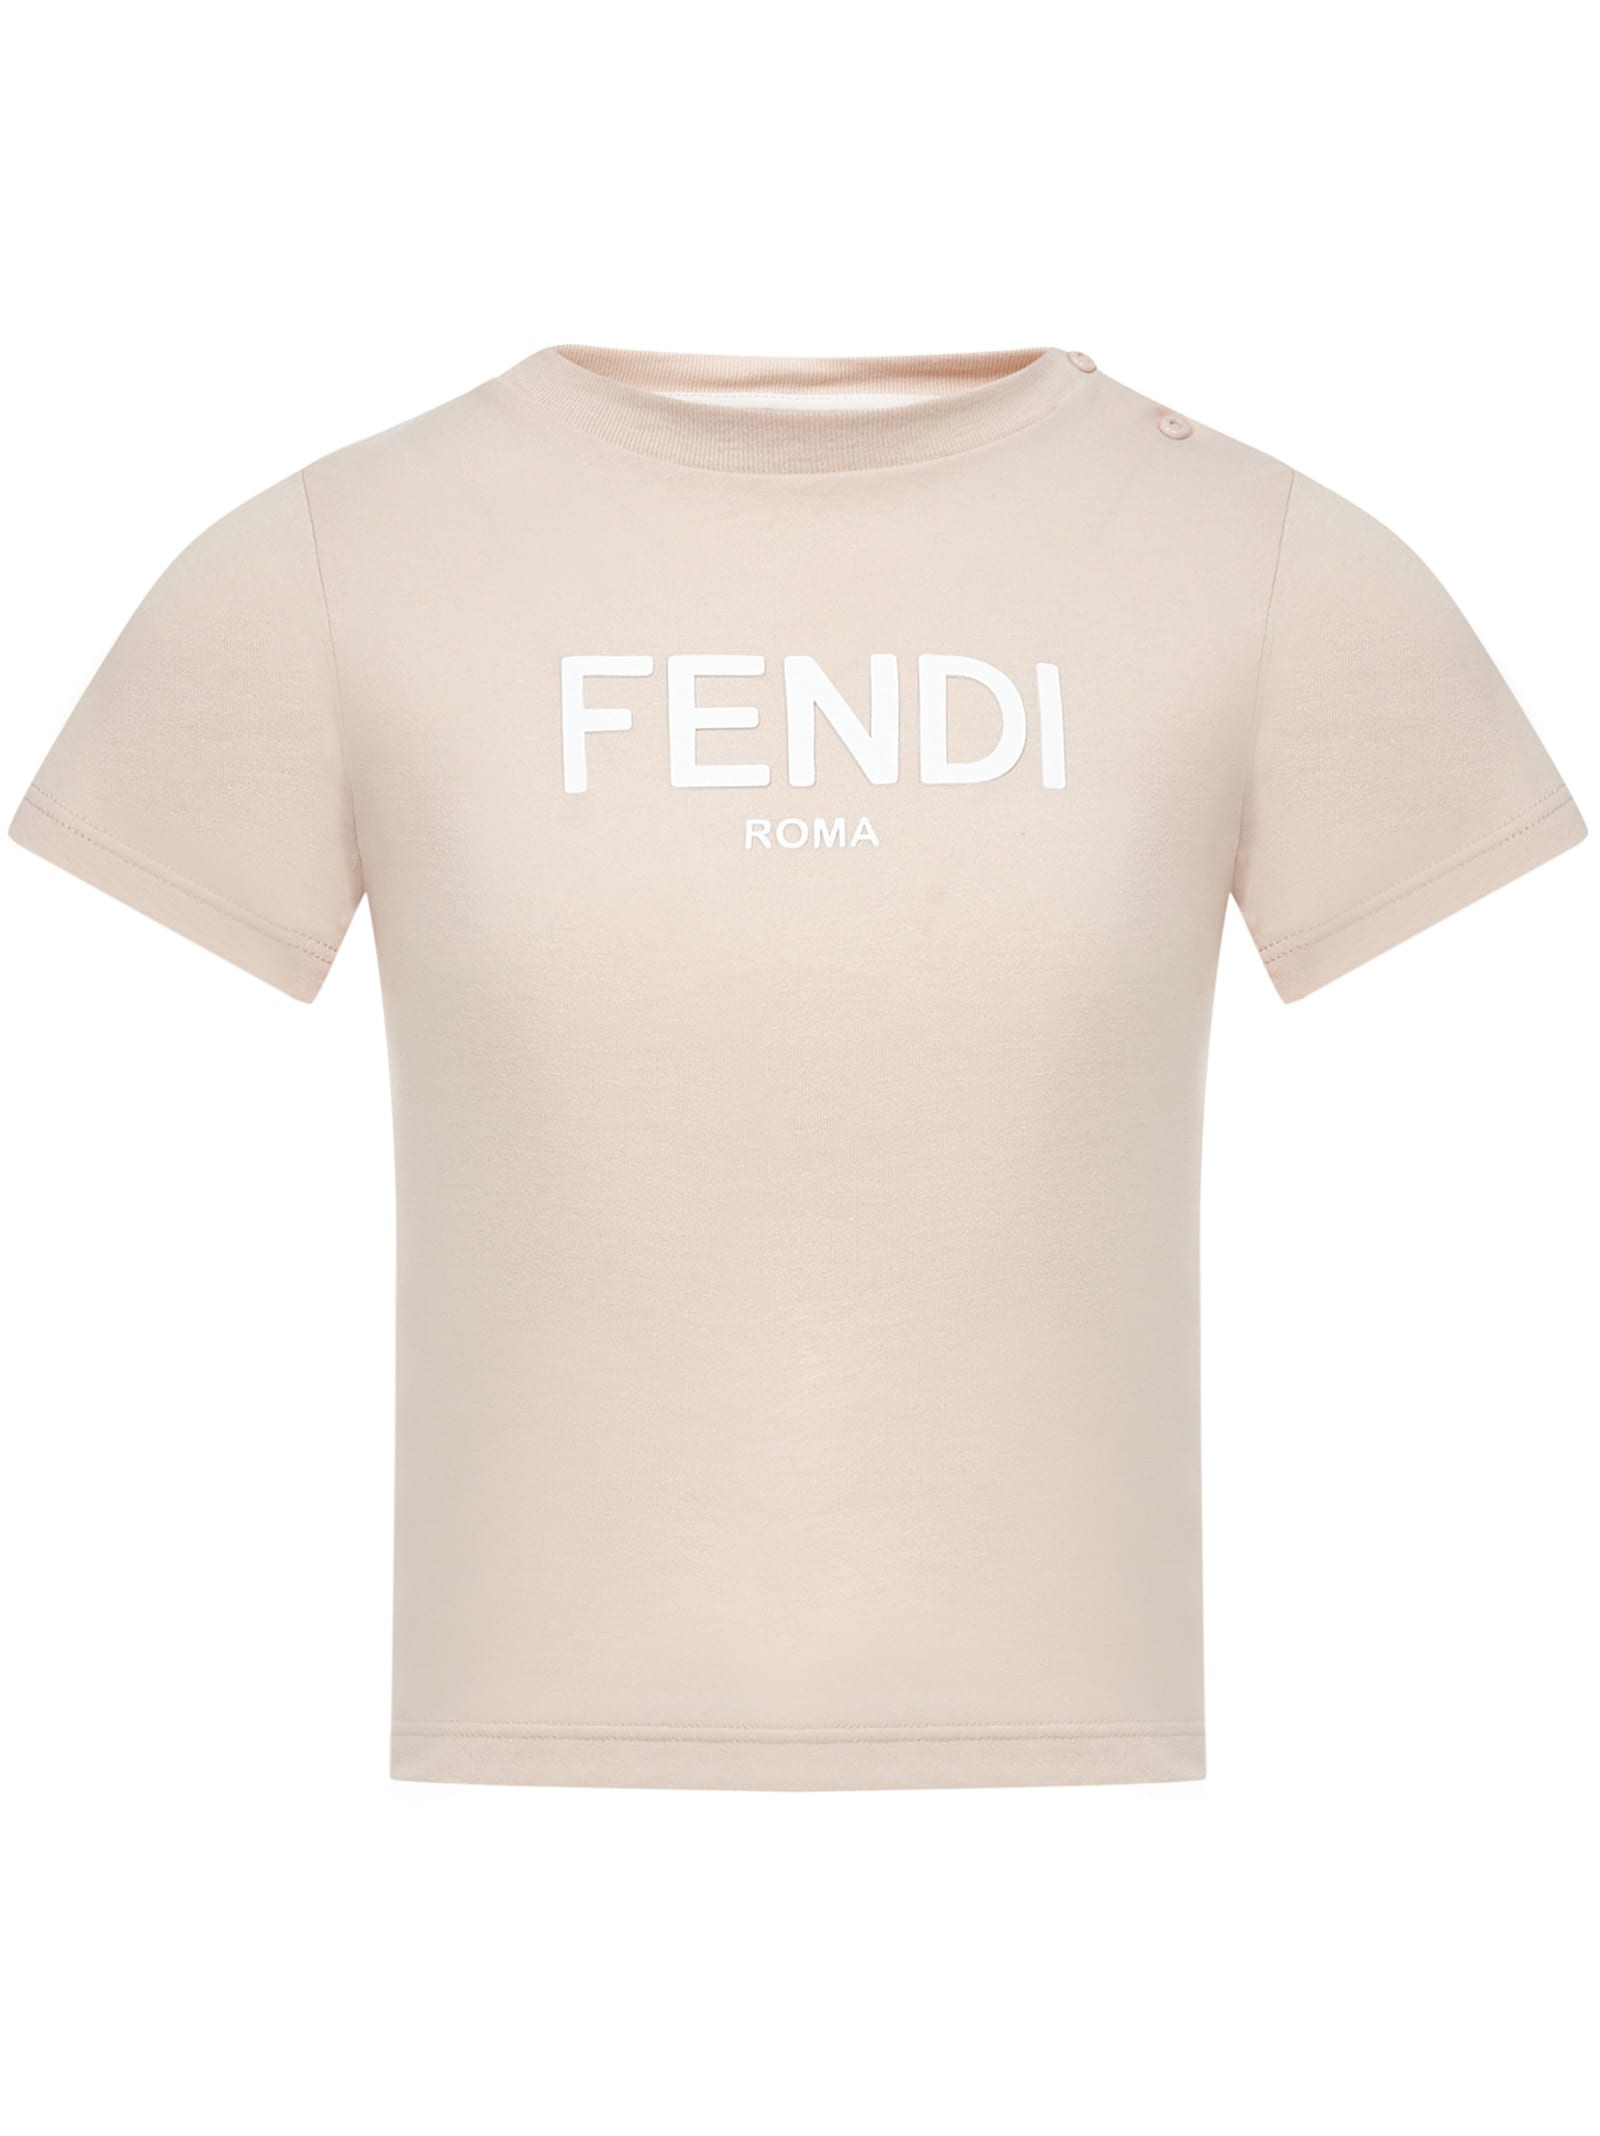 FENDI KIDS T-SHIRT,BUI019 AEXLF16WG